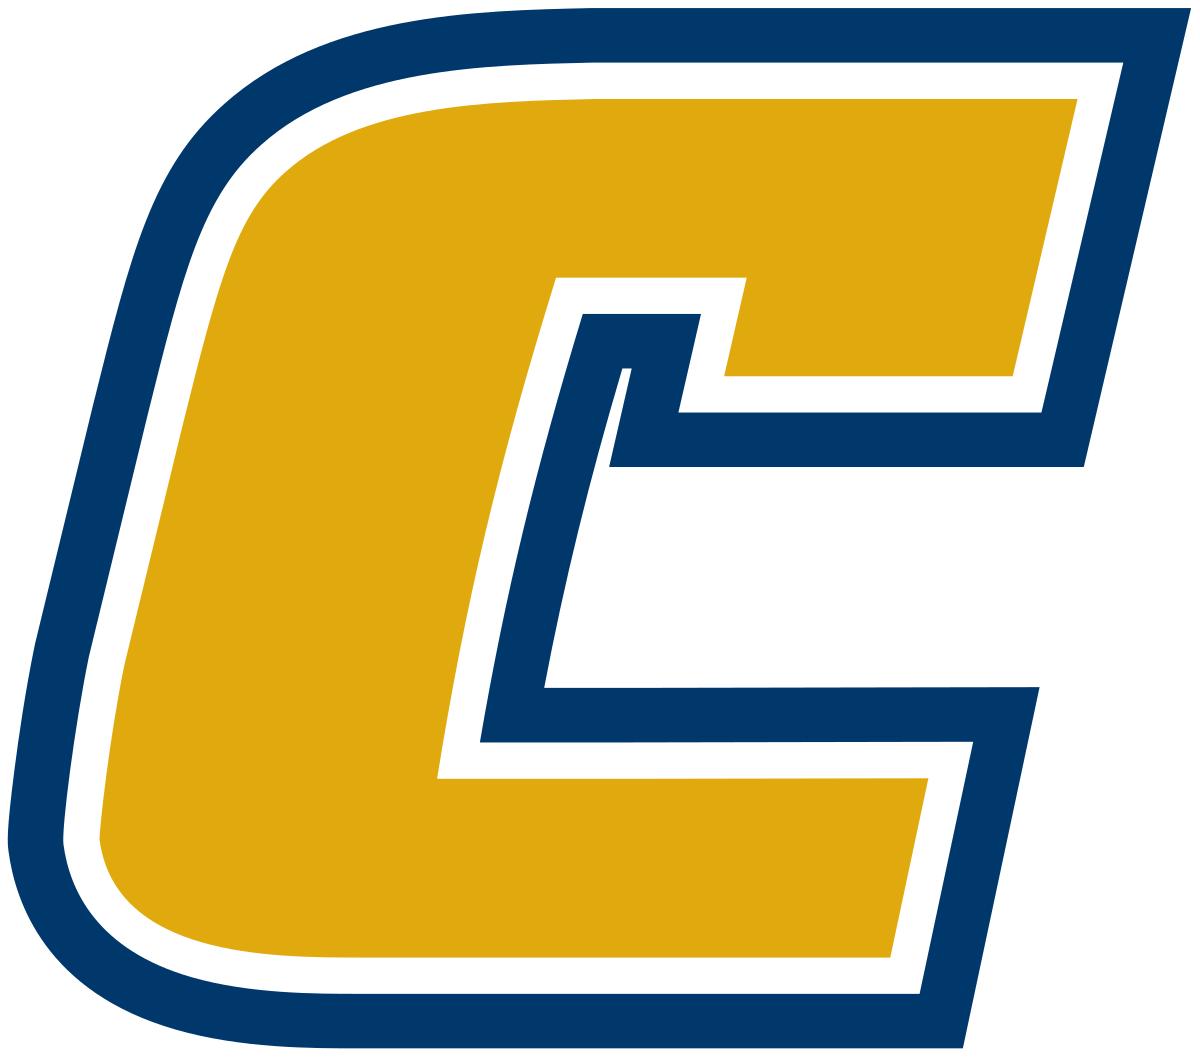 Chattanooga mocs football logo